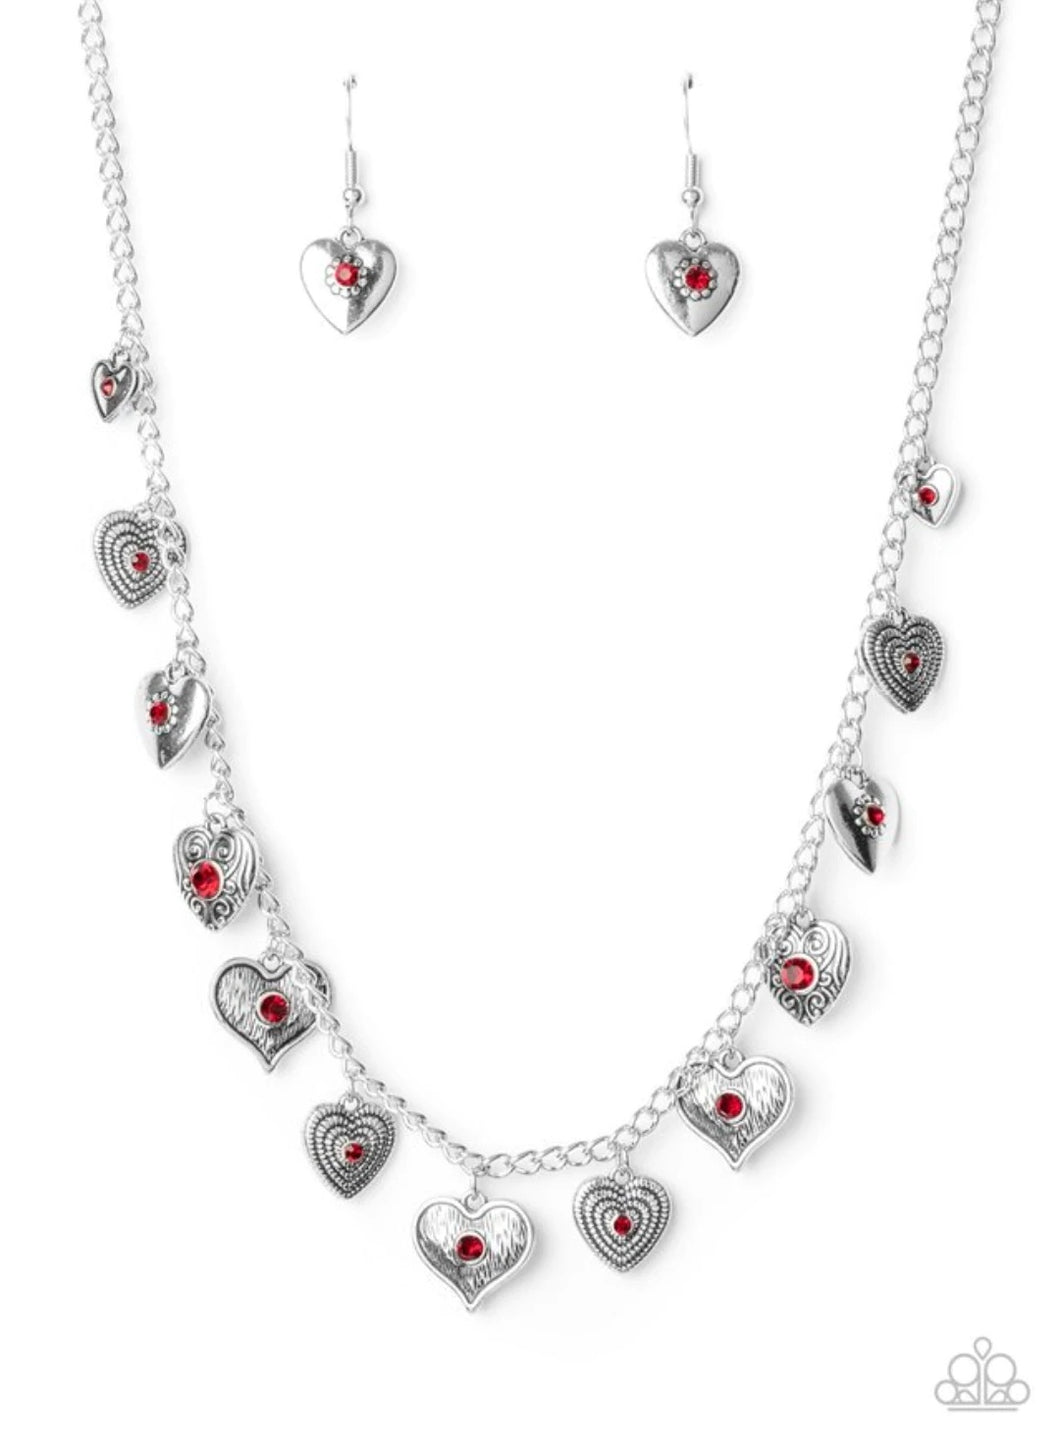 Lovely Lockets - Red Necklace freeshipping - JewLz4u Gemstone Gallery